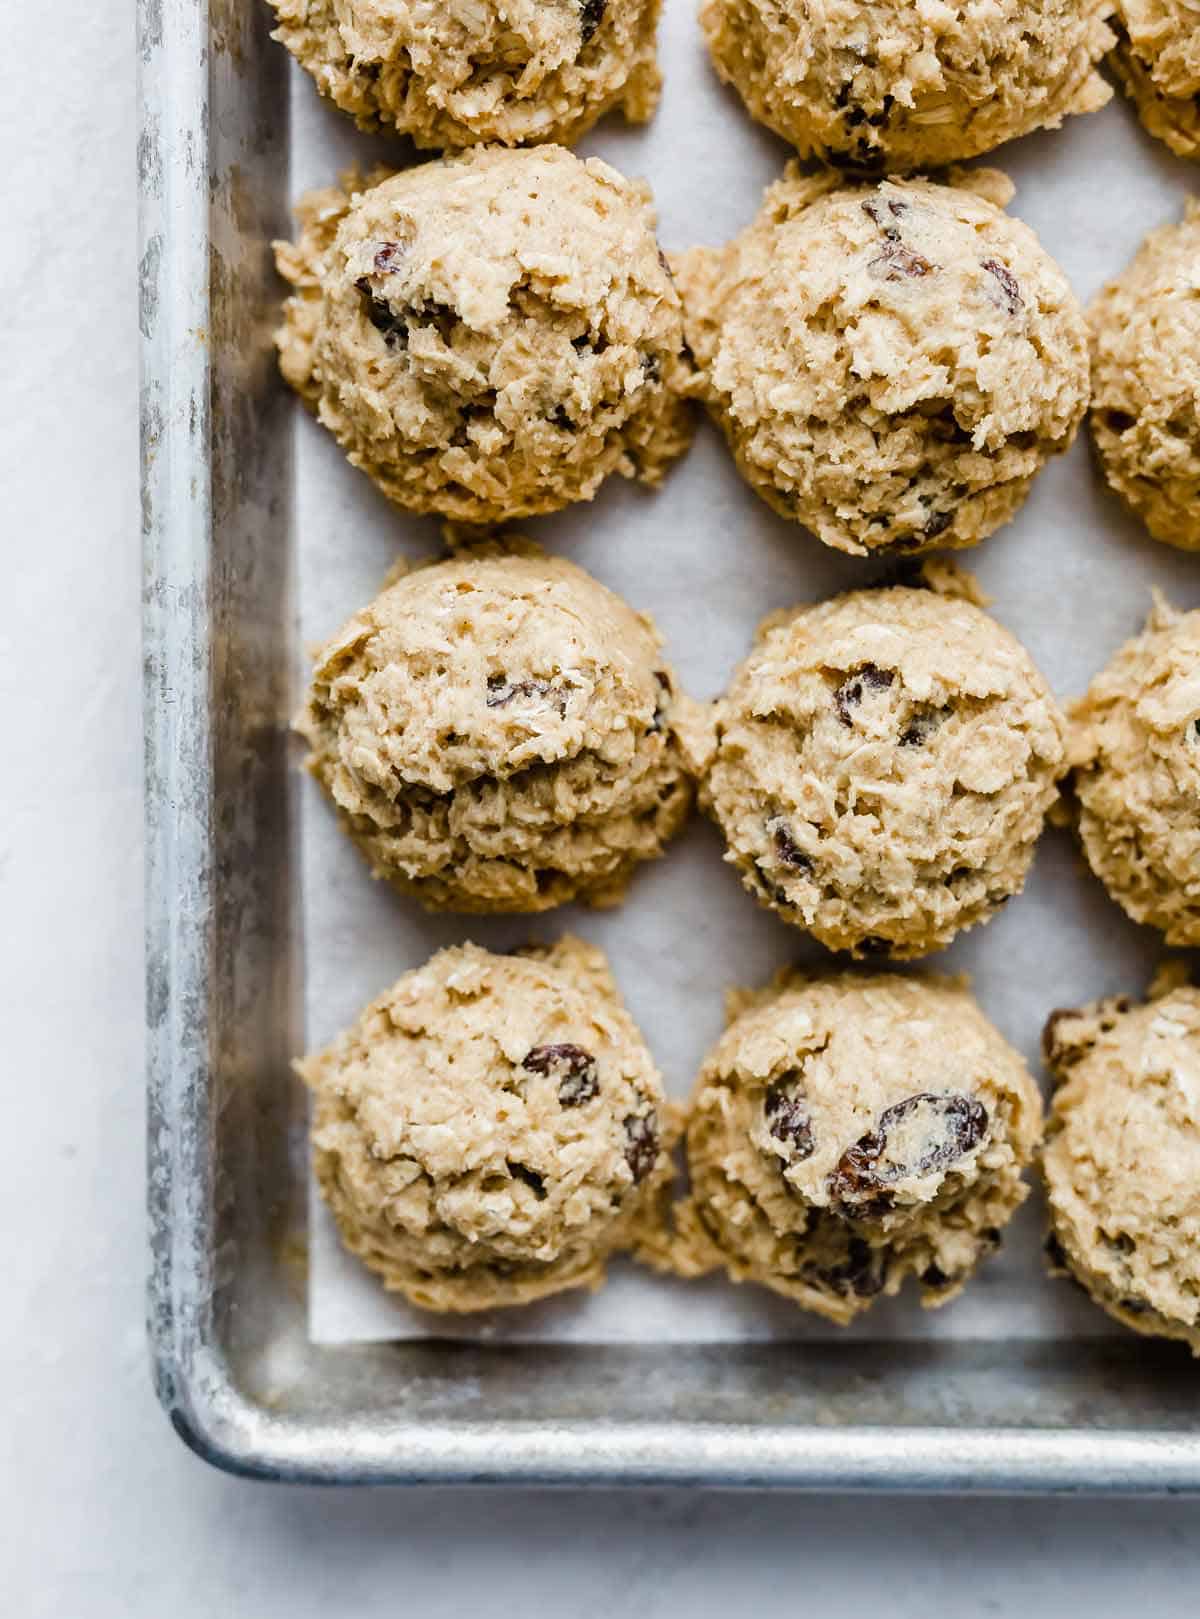 Oatmeal raisin cookie dough balls on a baking sheet.